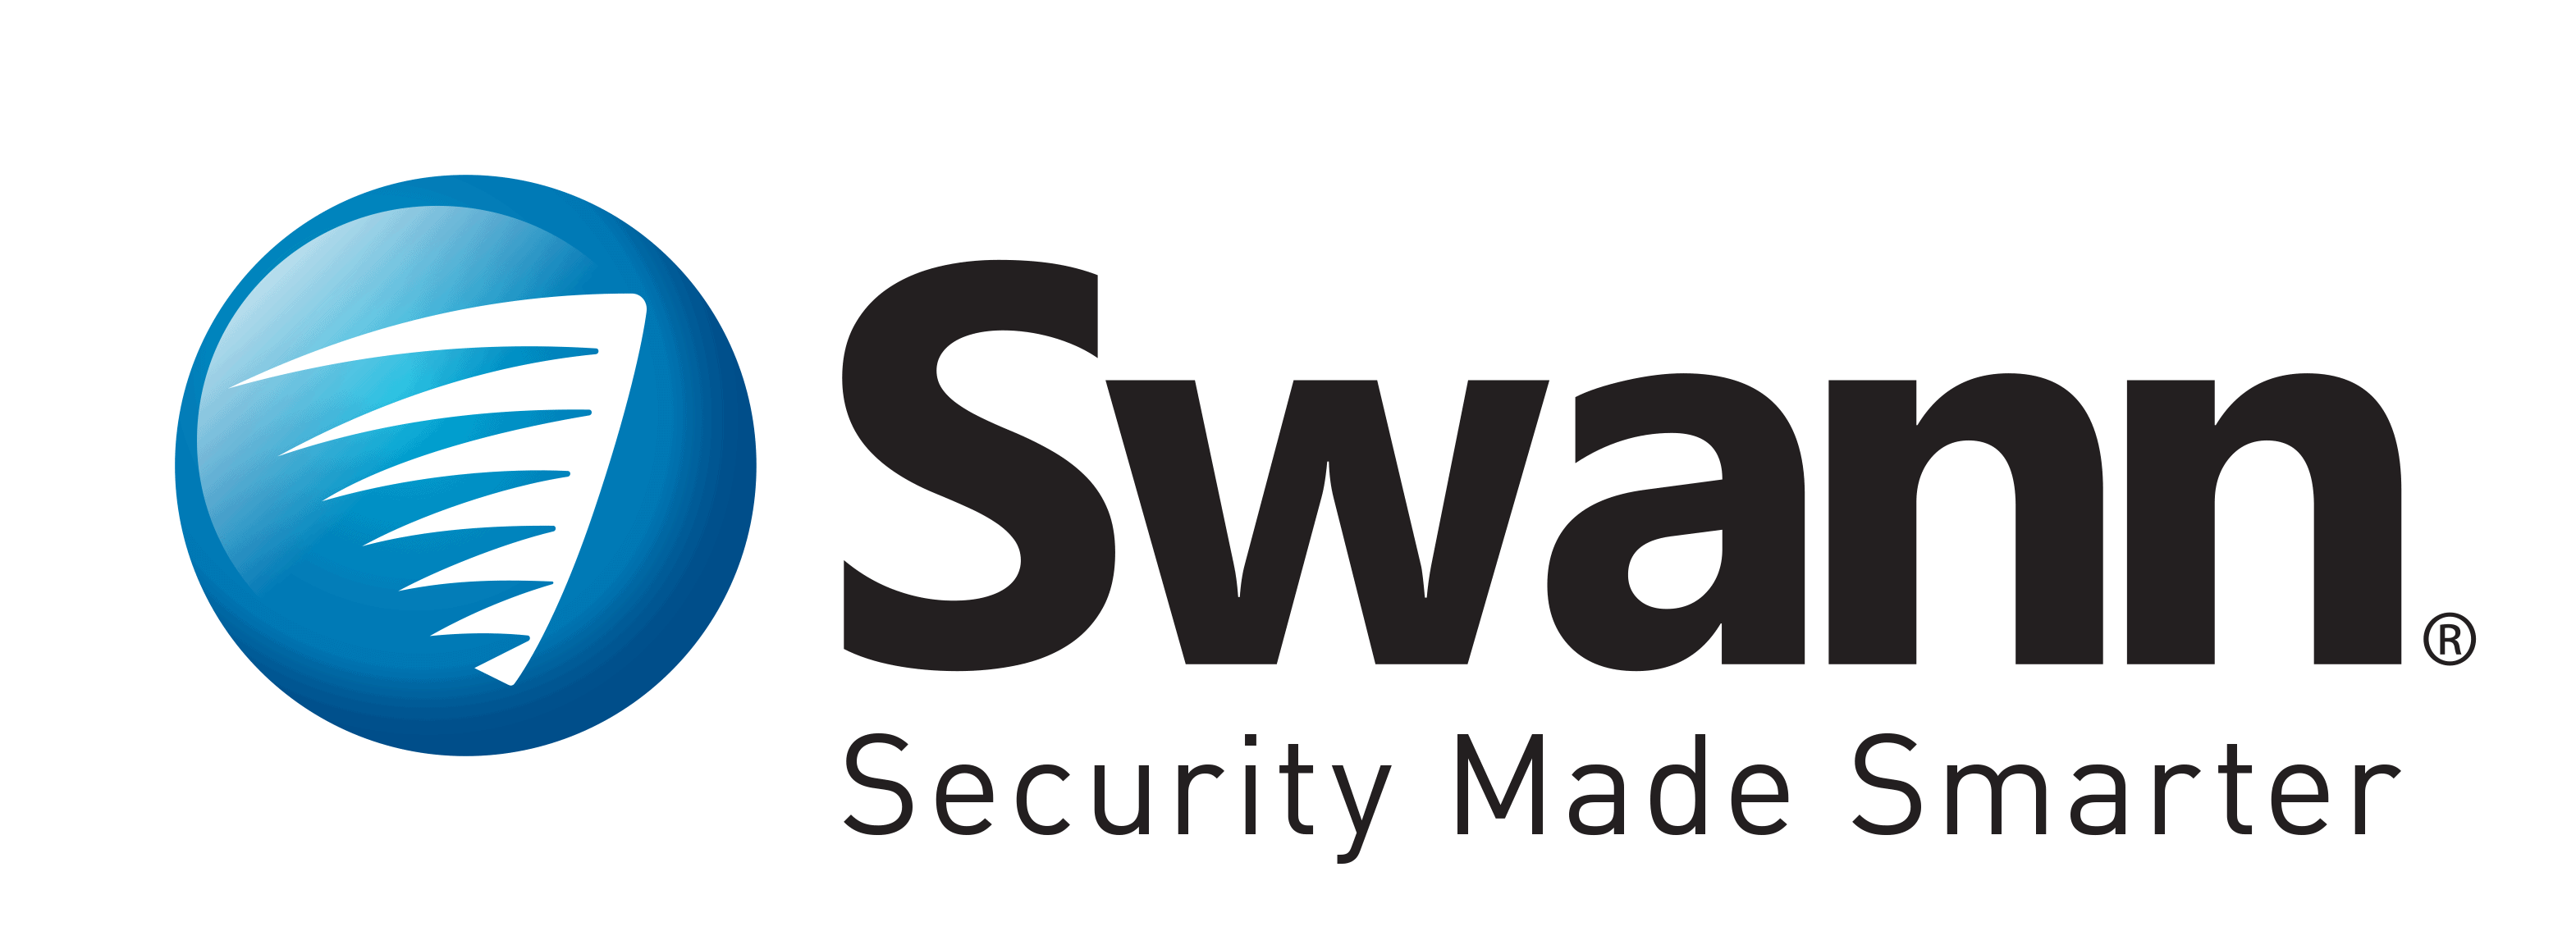 Swann - Product Logo